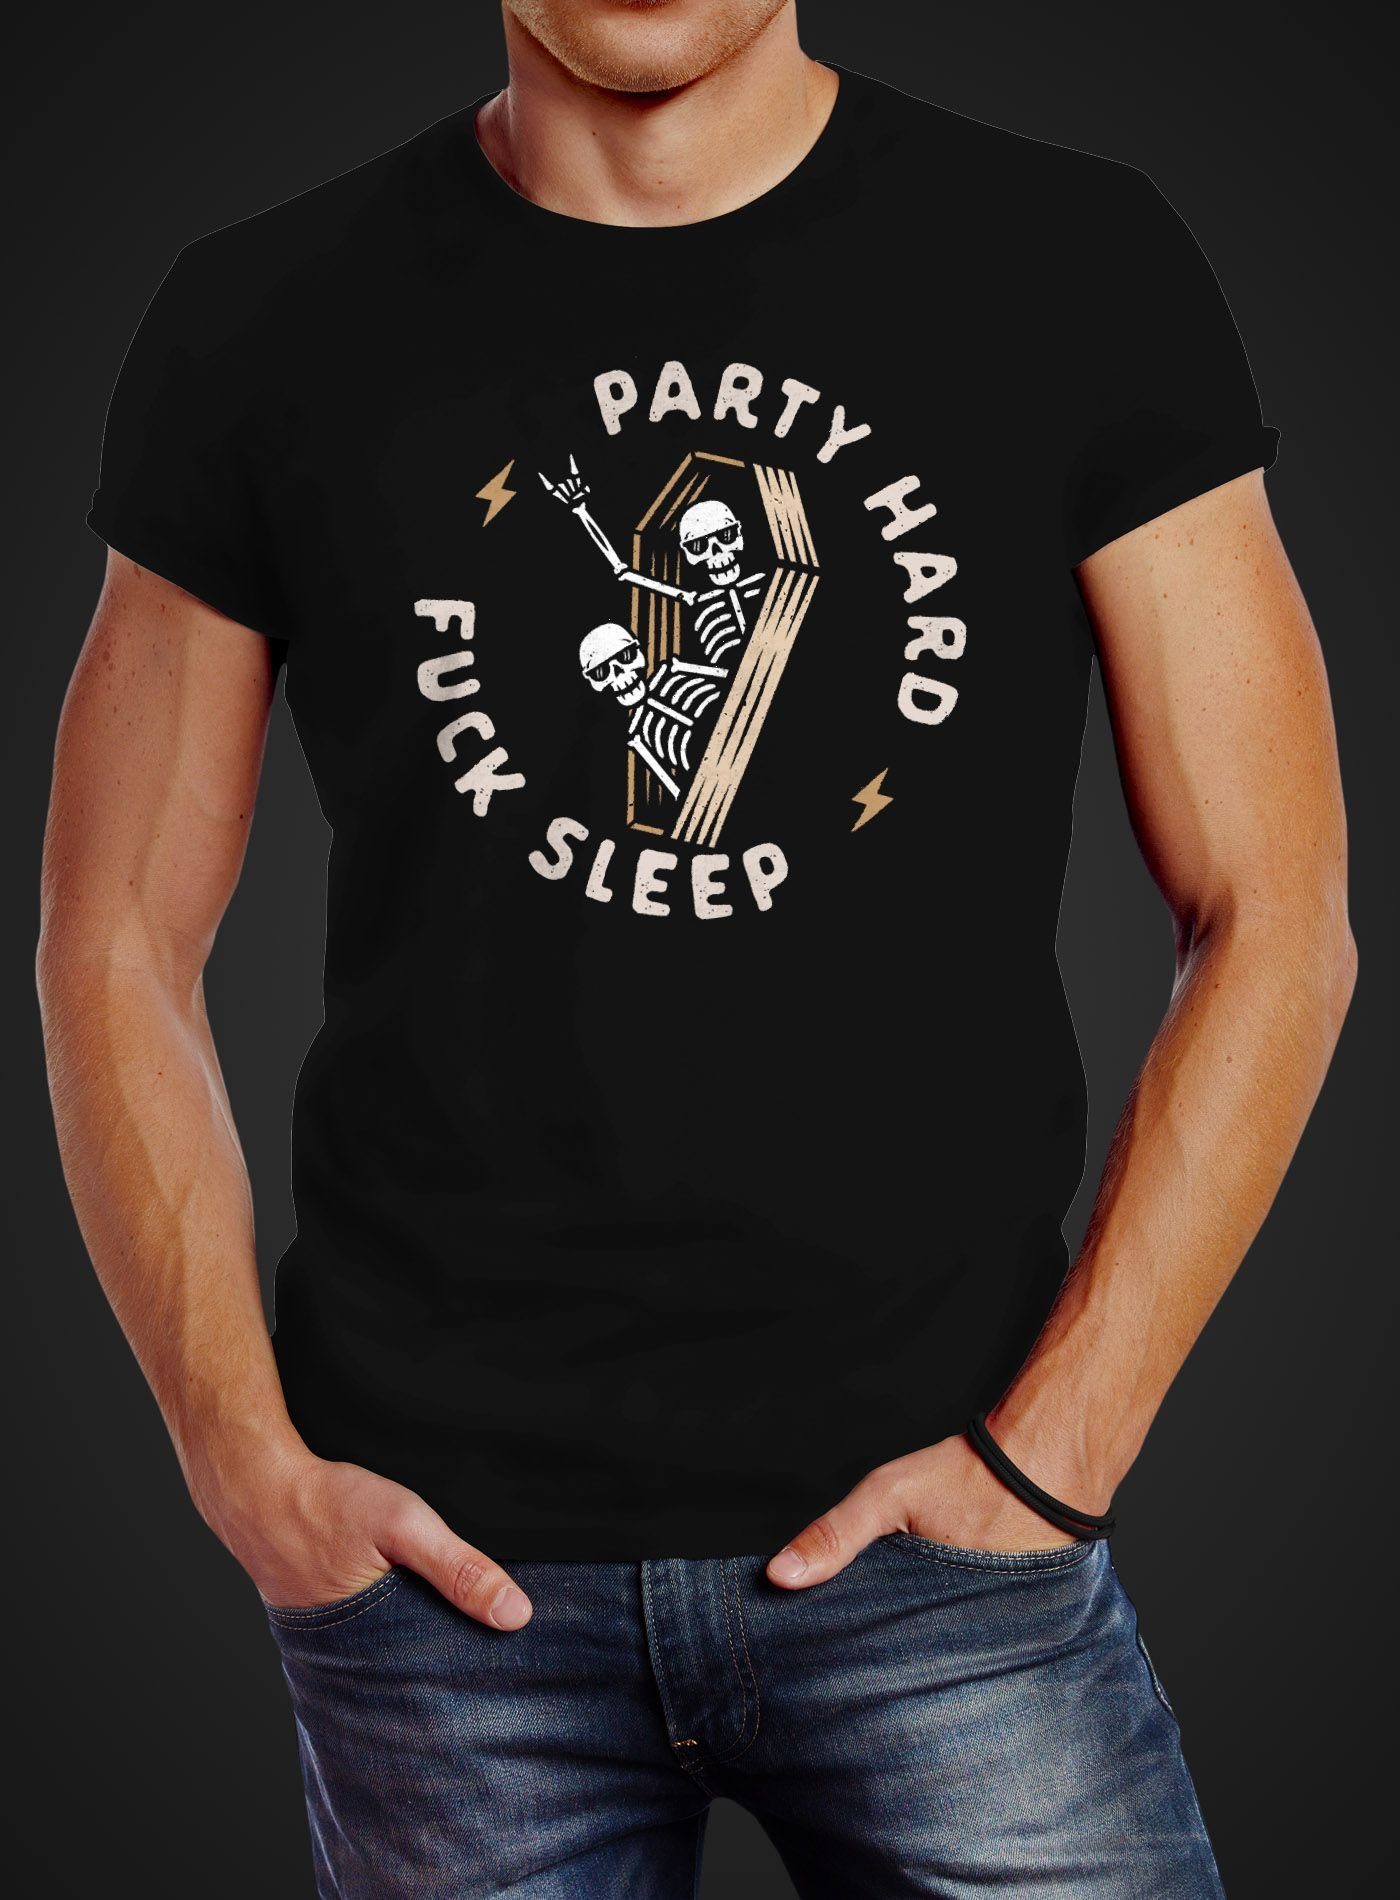 Neverless Print-Shirt Herren Fuck Print Print T-Shirt mit Sarg Motiv Neverless® Spruch Party Skelett Sleep Fit Skeleton Hard Slim